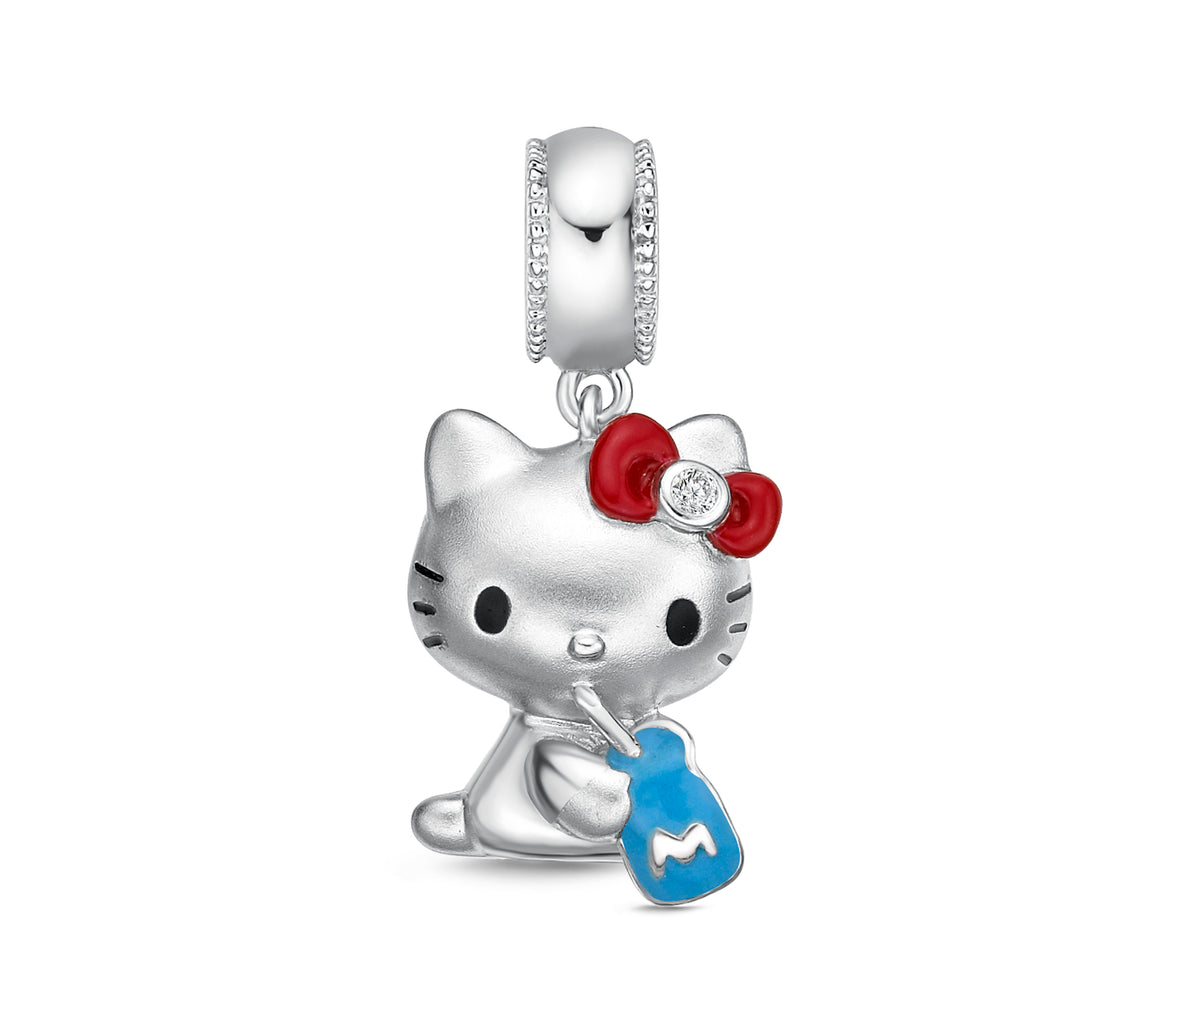 Hello Kitty Sterling Silver Enamel Necklace